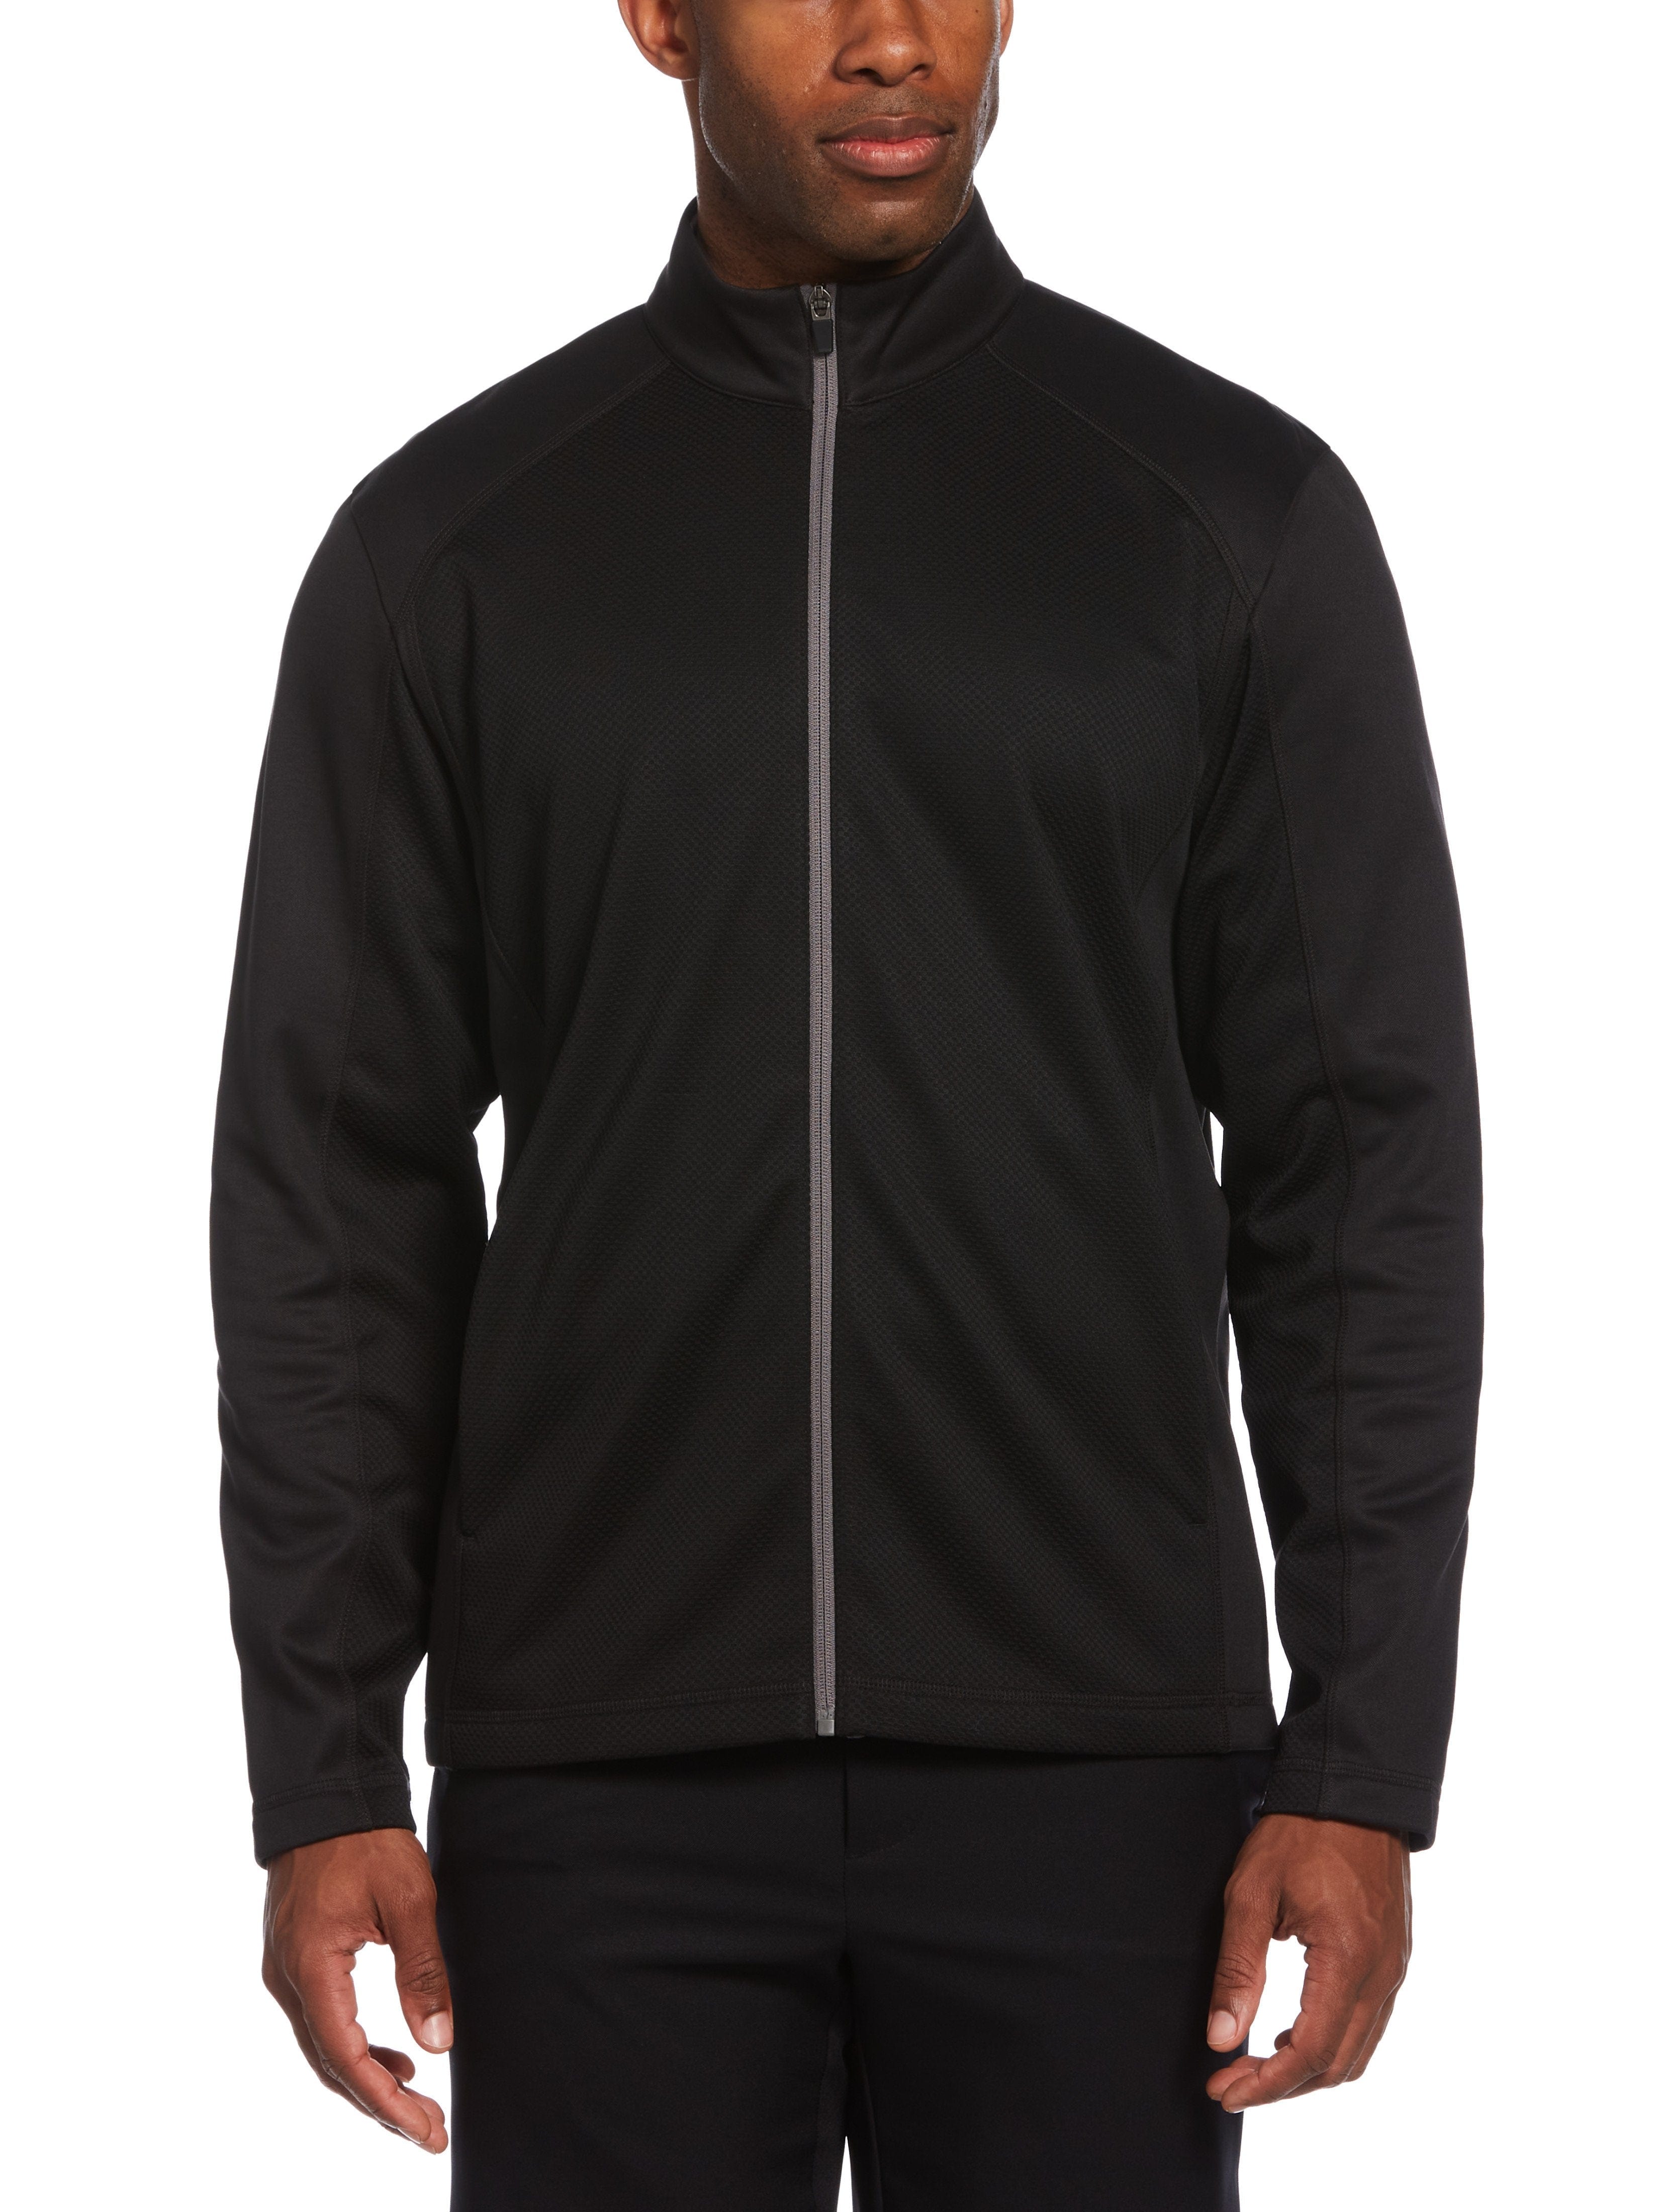 PGA TOUR Apparel Mens Mixed Texture Fleece Golf Jacket Top, Size 2XL, Black, 100% Polyester | Golf Apparel Shop